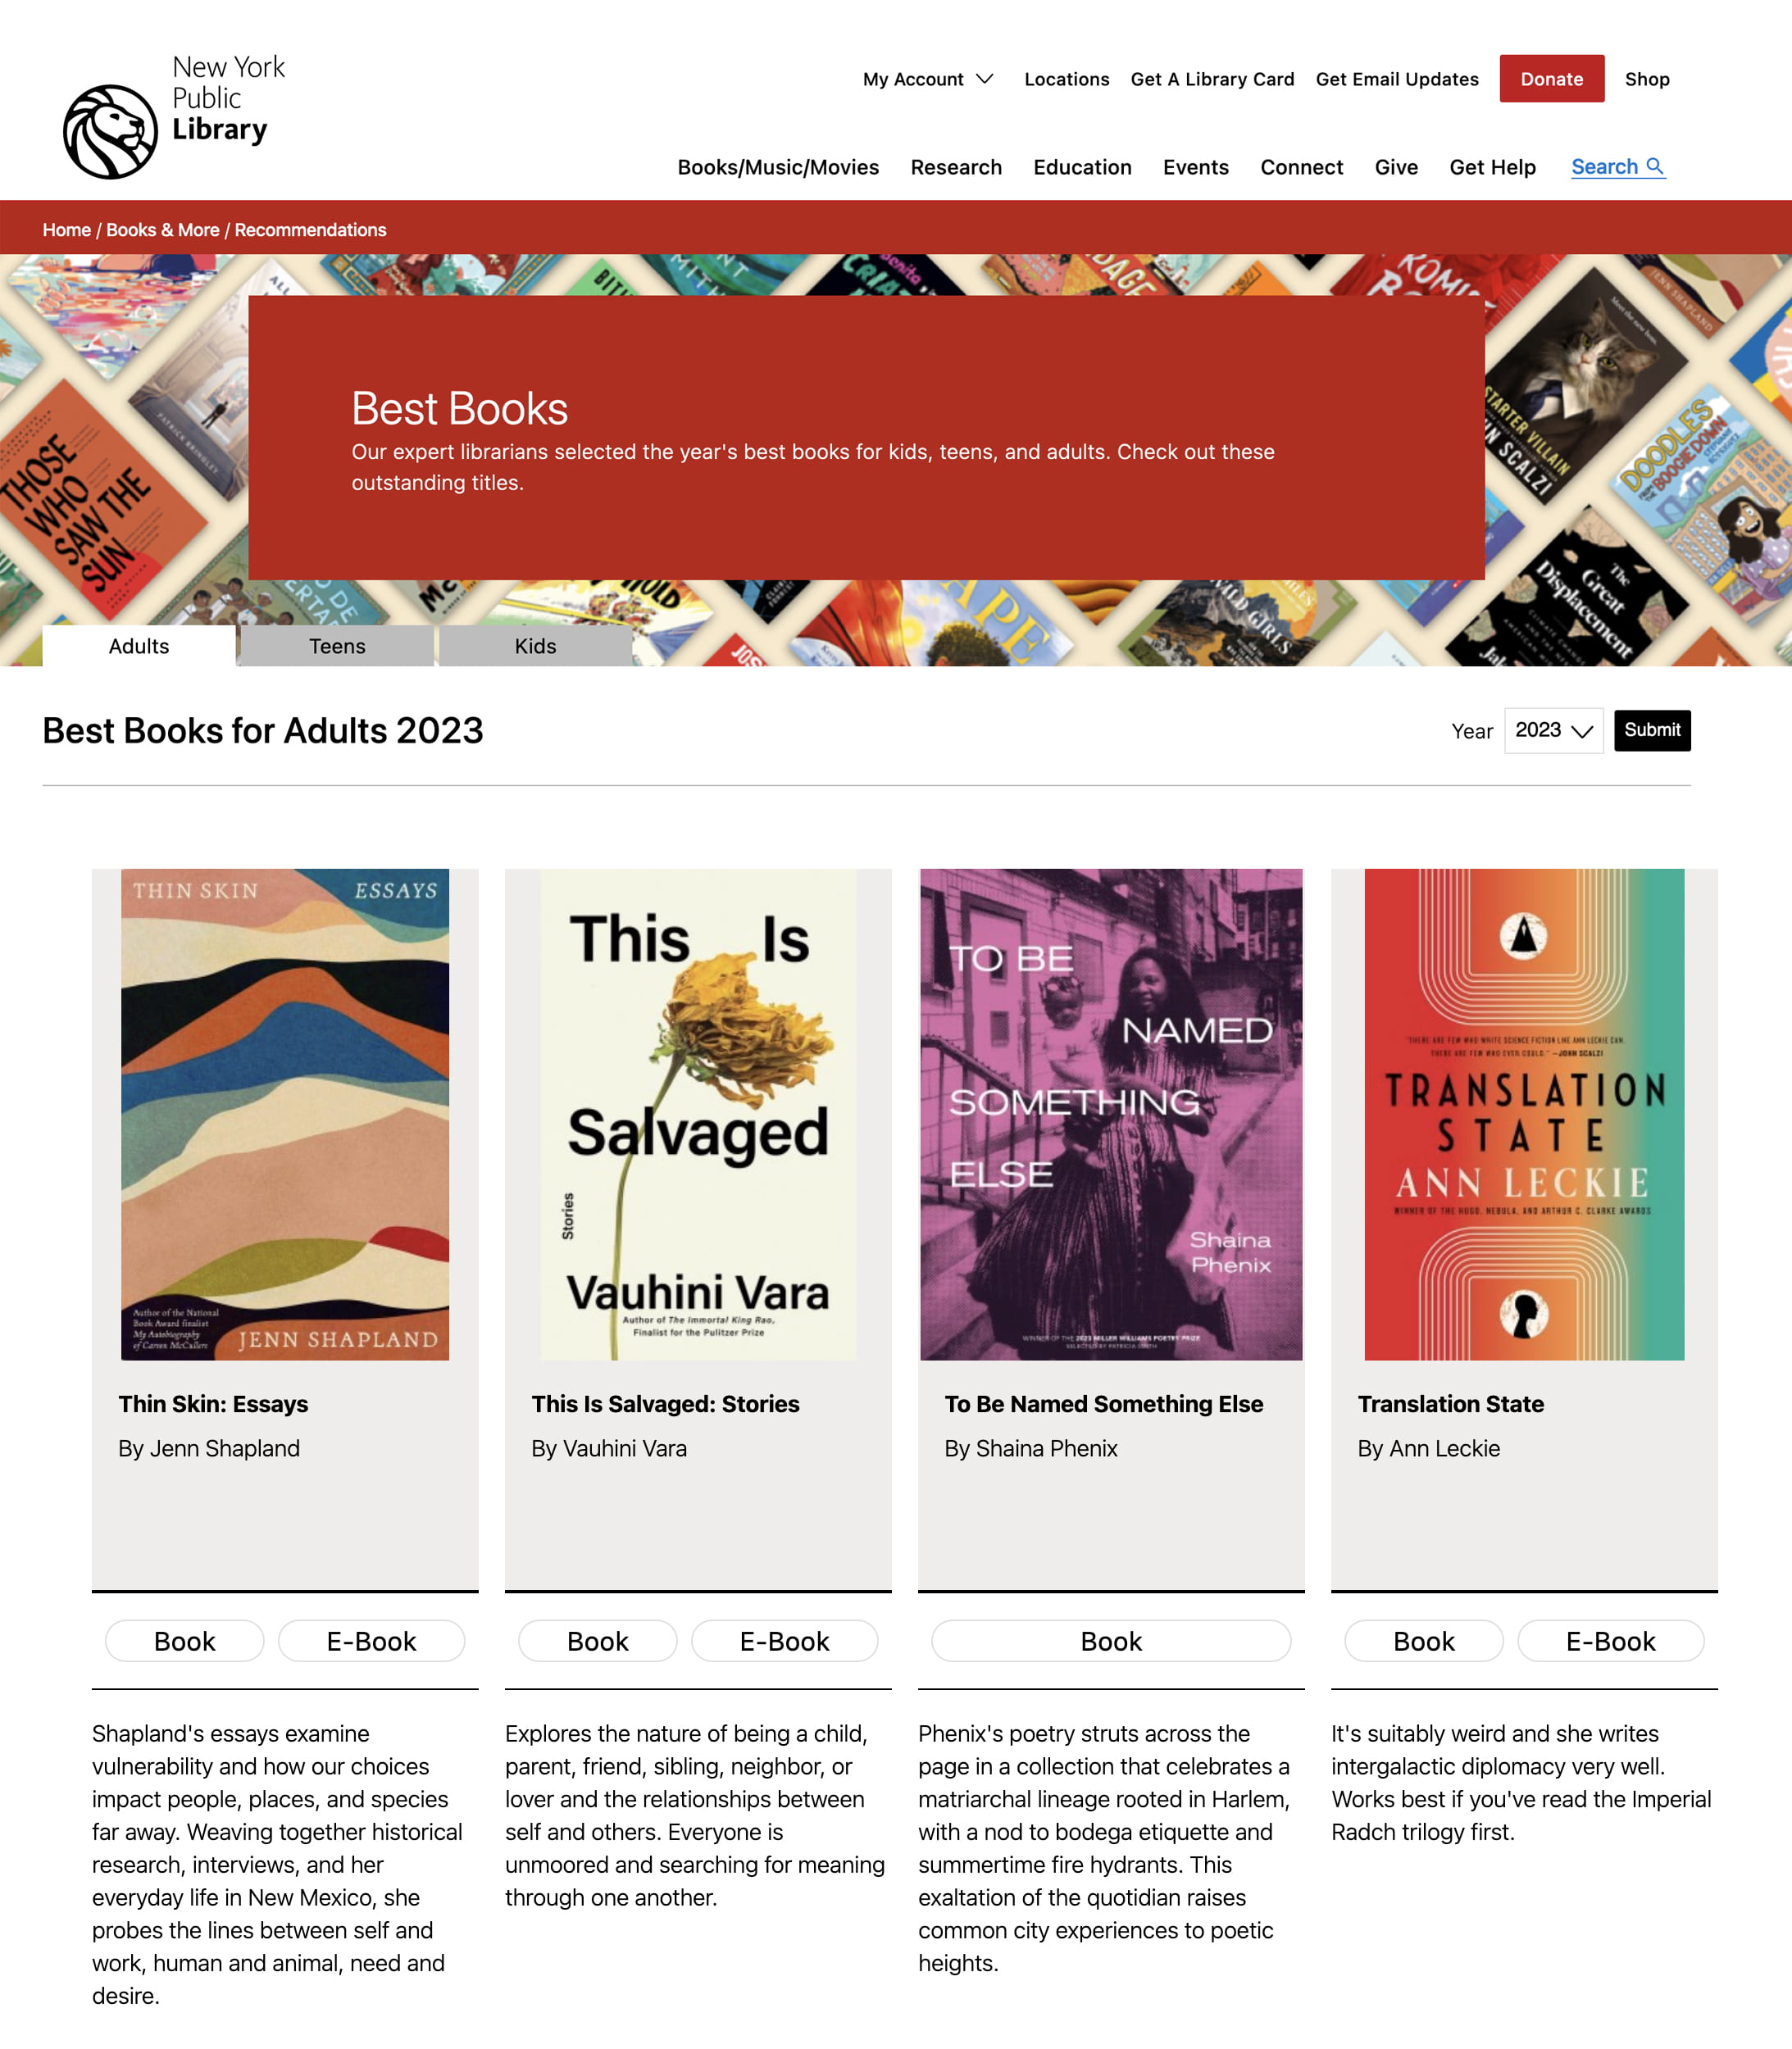 New York Public Library Best Books 2023 Shaina Phenix To Be Named Something Else blog post image